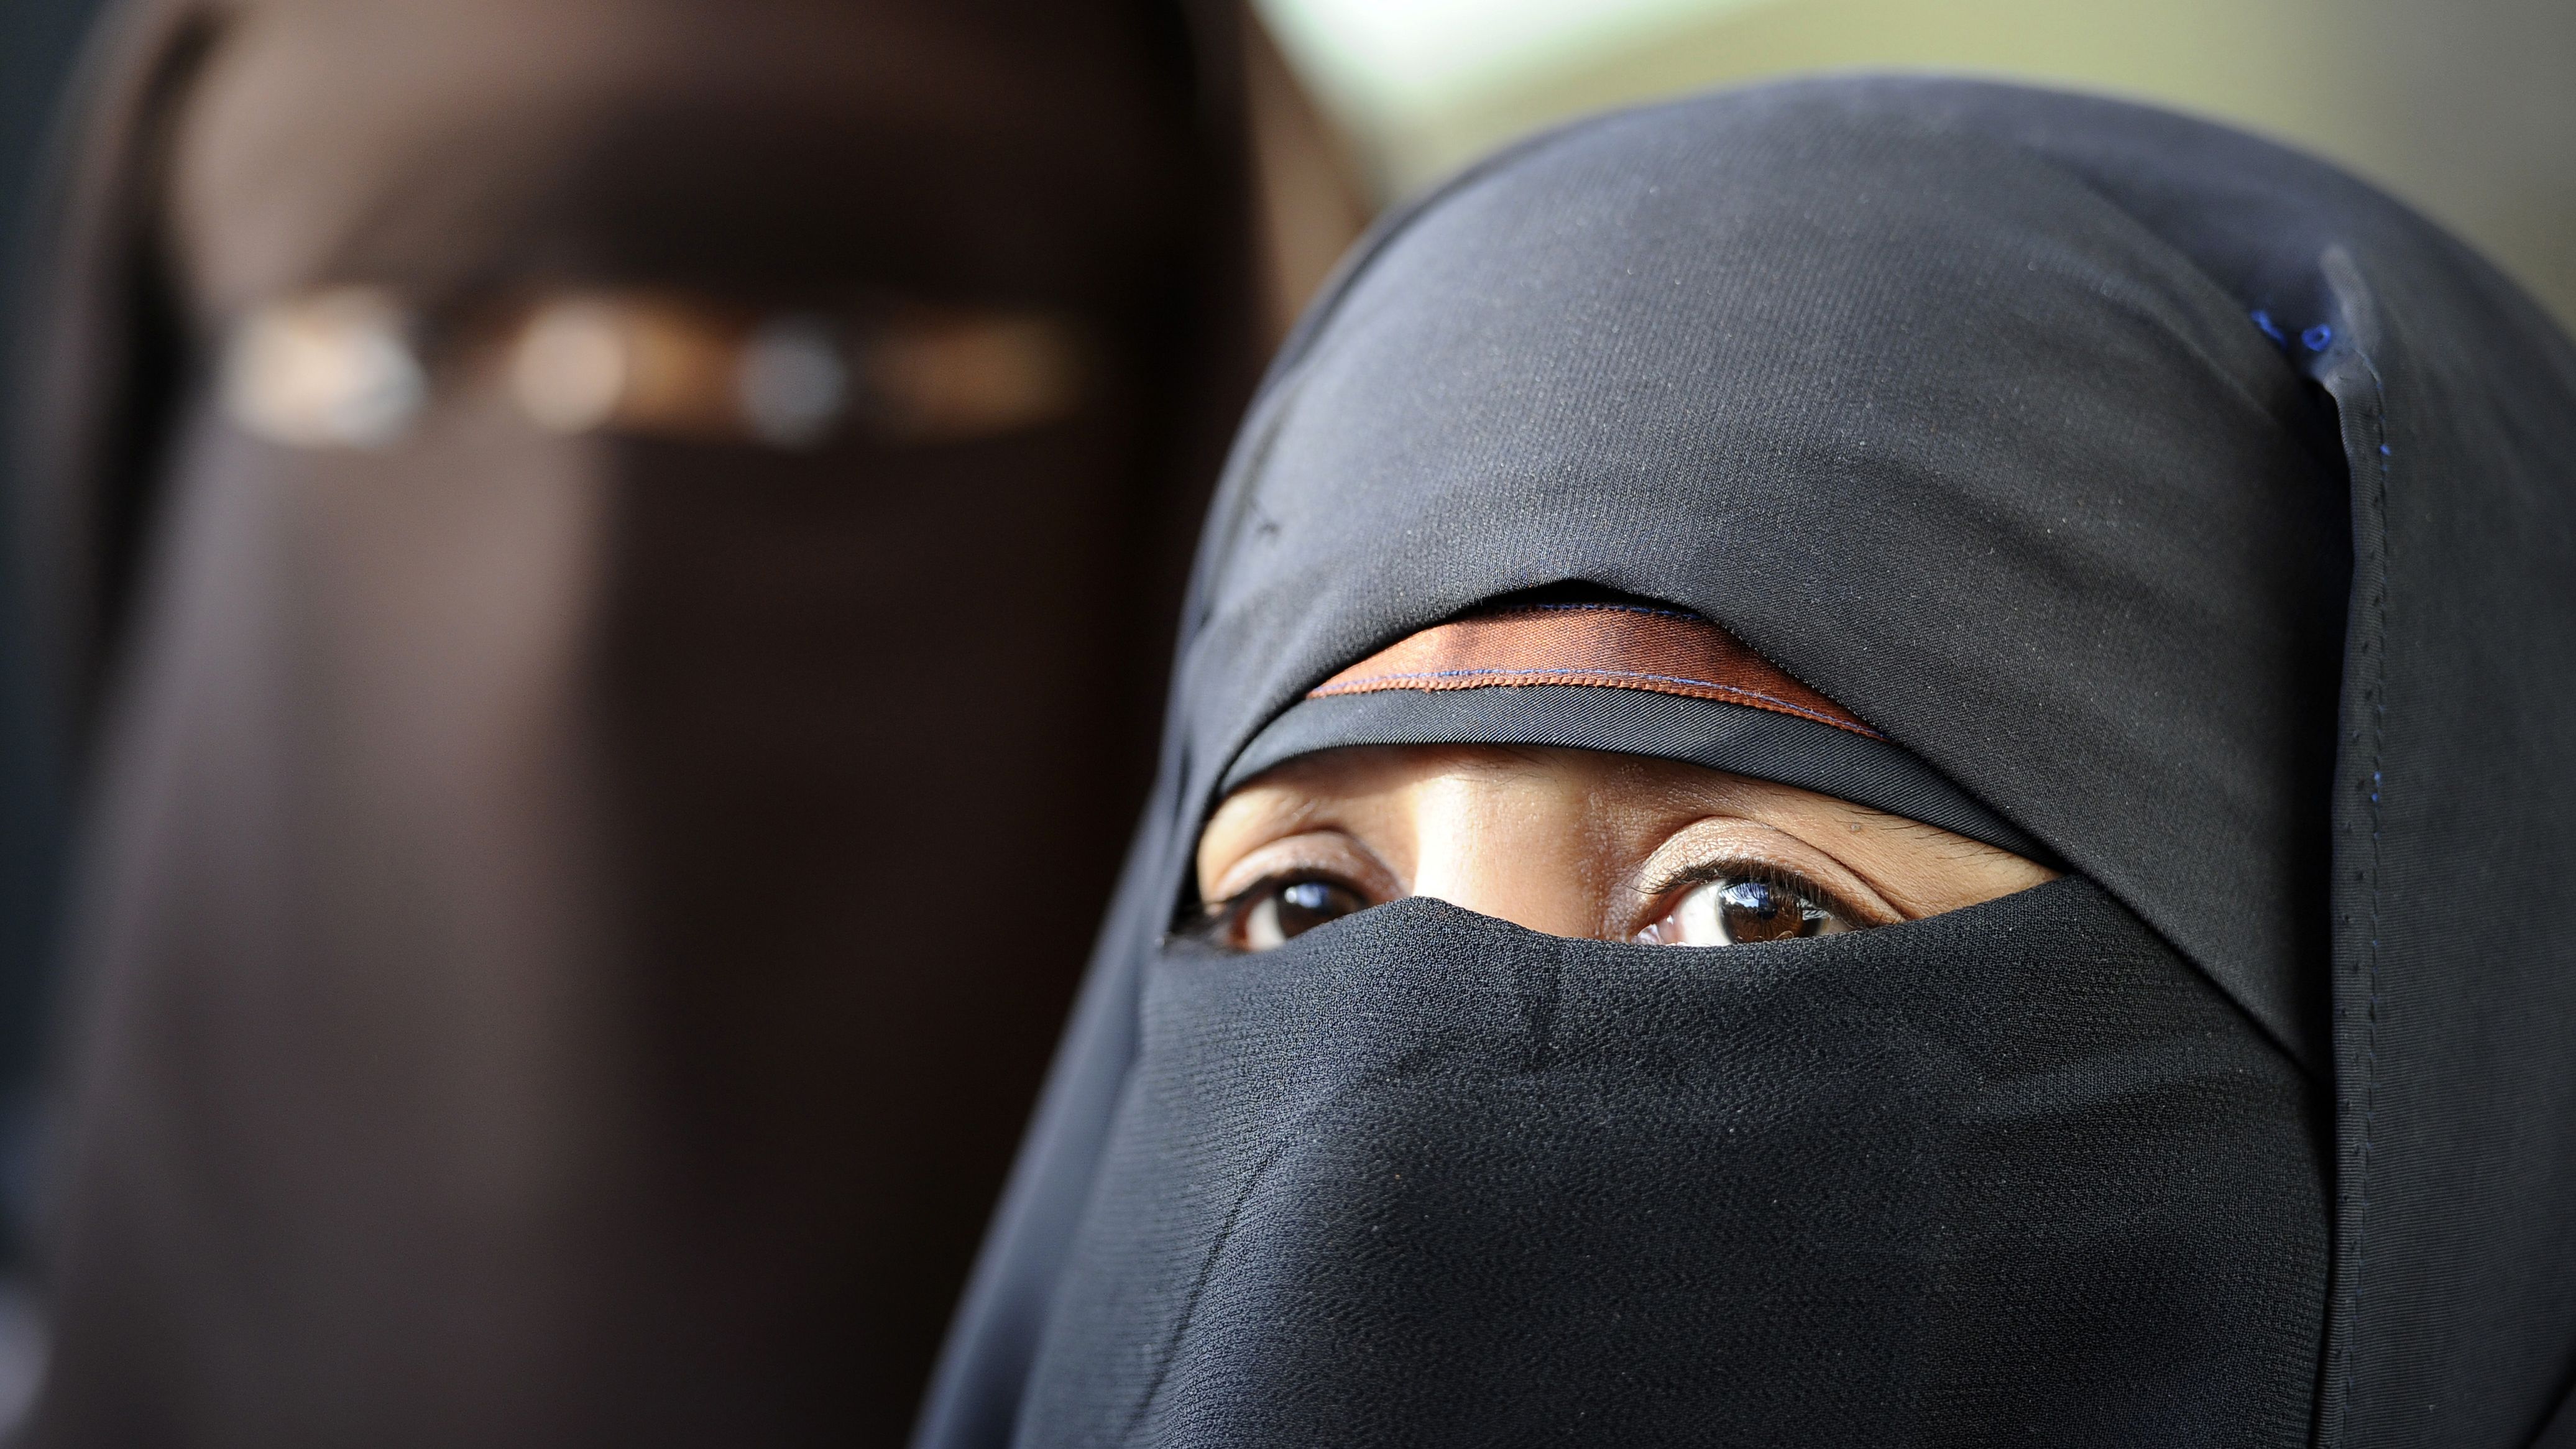 https://media.cnn.com/api/v1/images/stellar/prod/141008161413-02-muslim-women-dress.jpg?q=w_4144,h_2331,x_0,y_0,c_fill